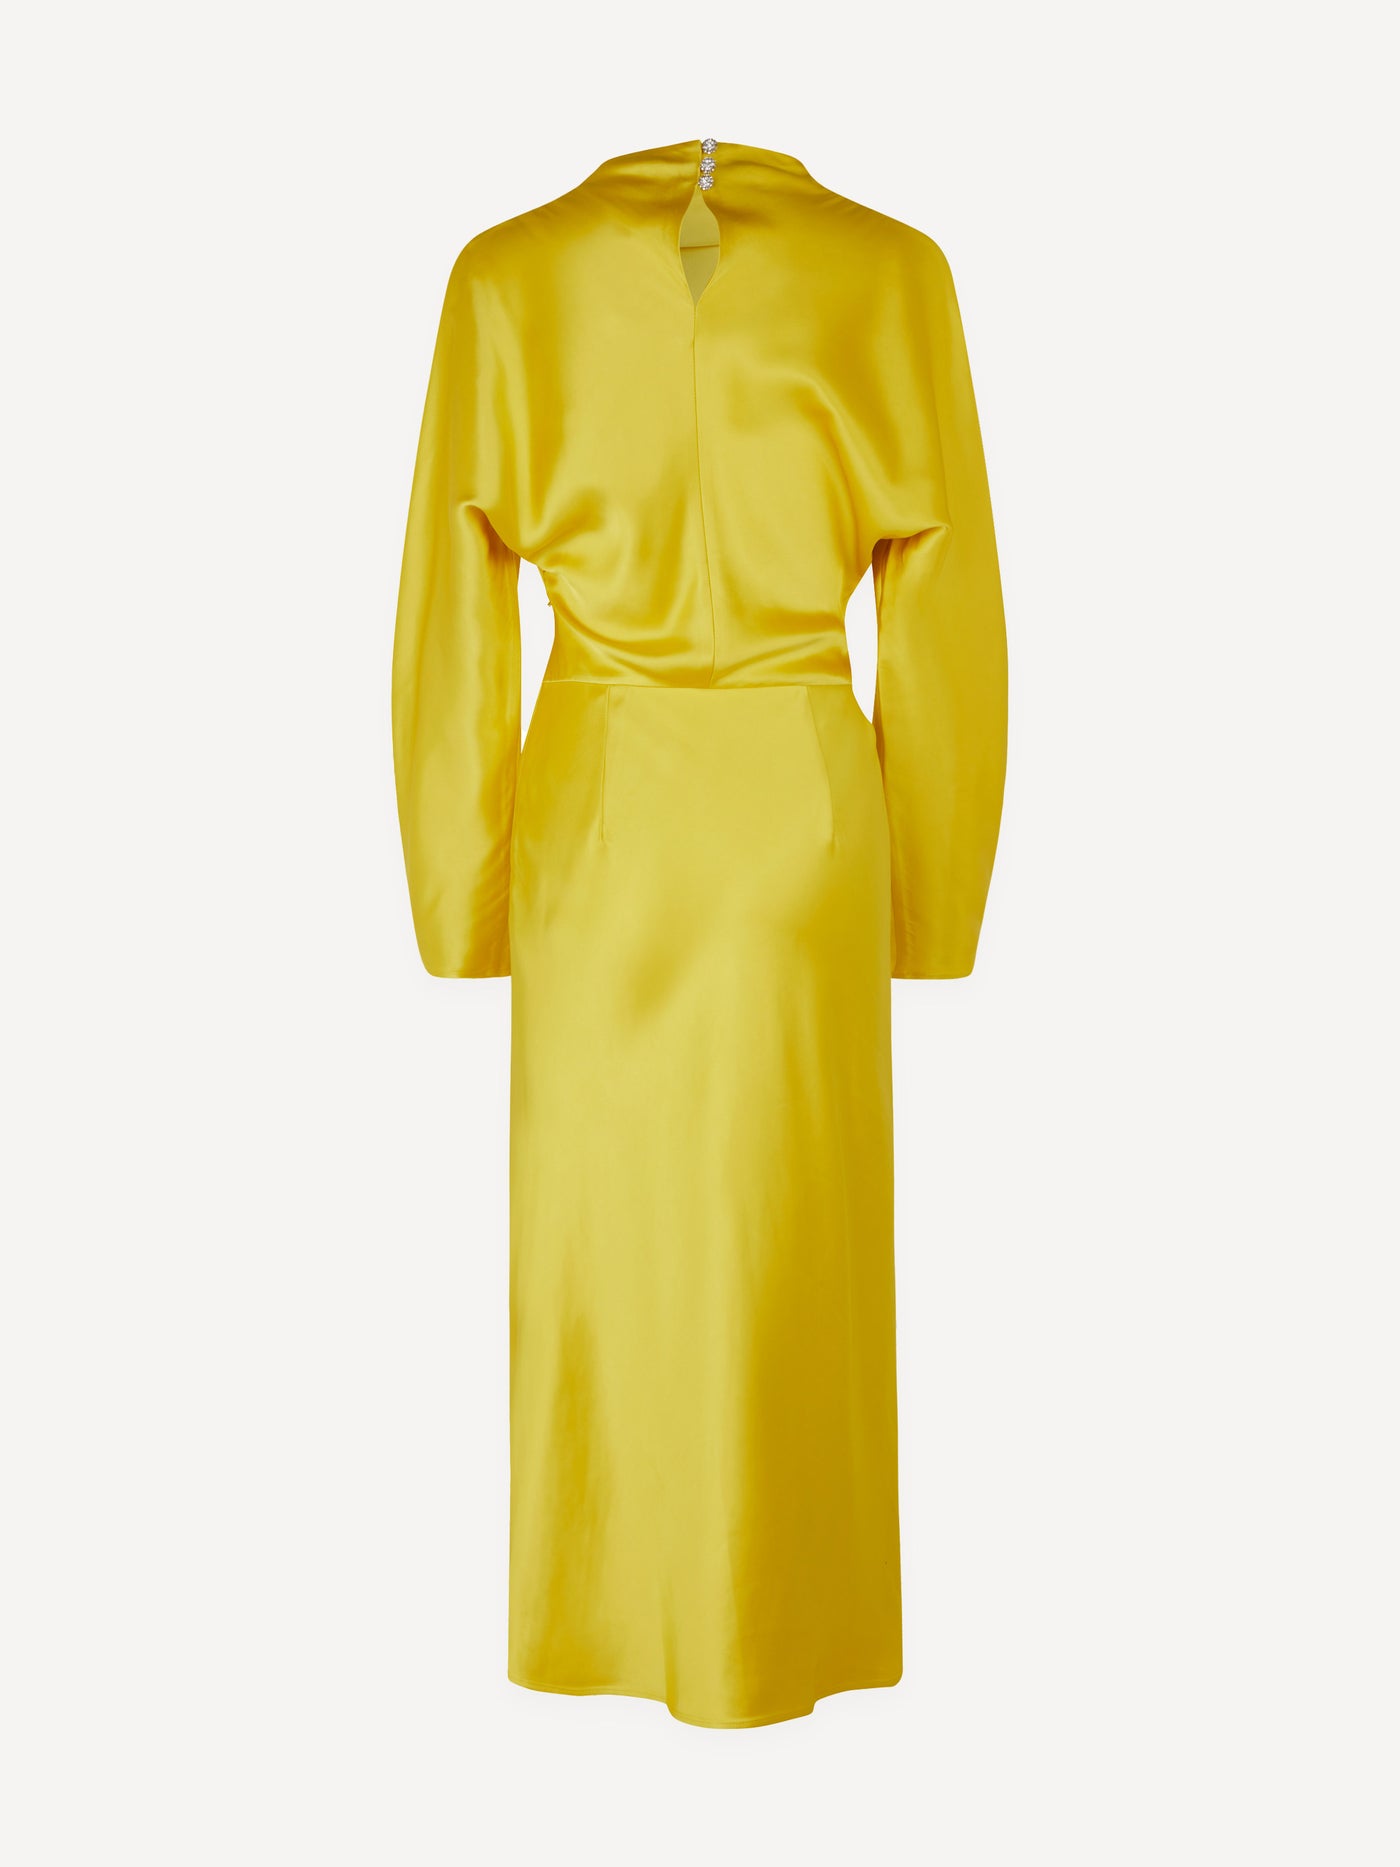 Damai dress, yellow